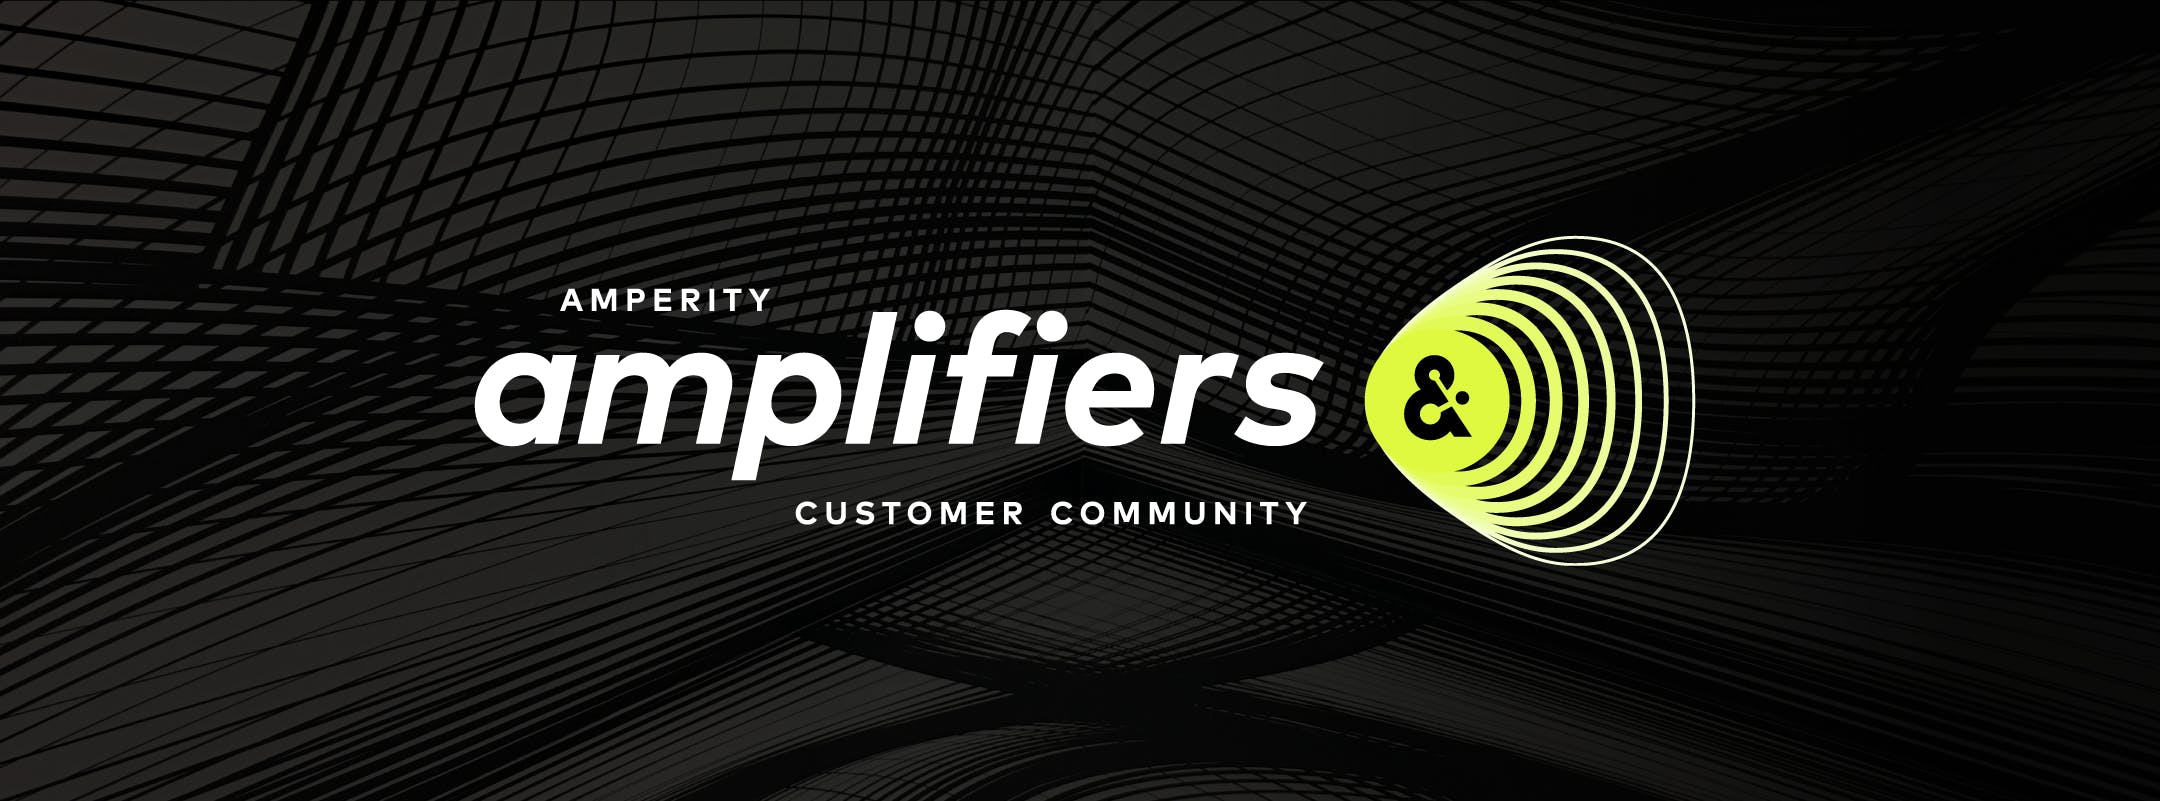 Amperity Amplifiers Customer Community